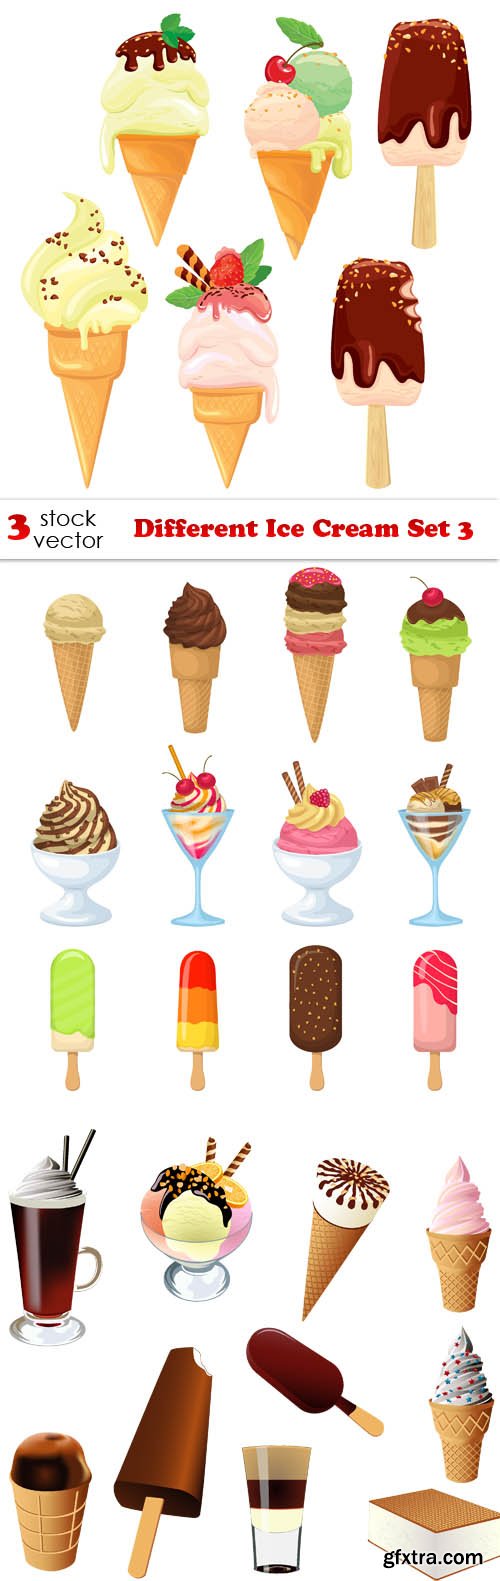 Vectors - Different Ice Cream Set 3